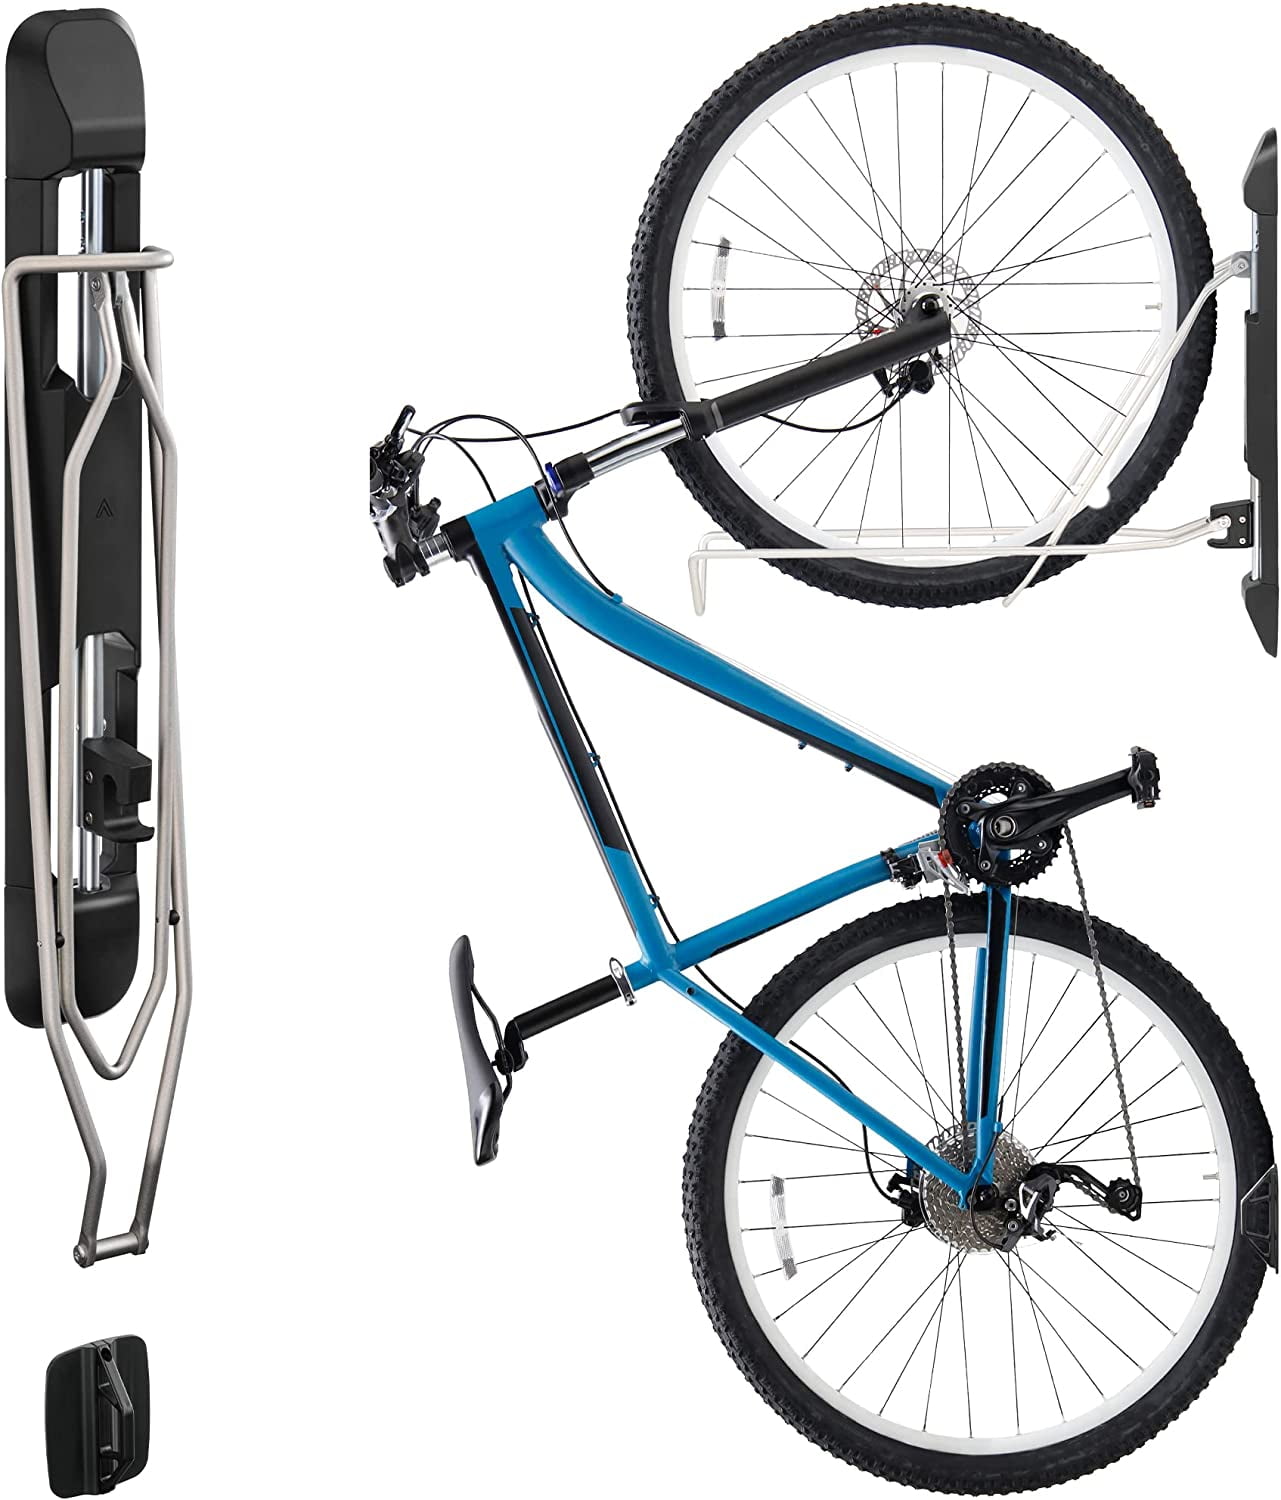 Superior Essentials Vertical Bike Rack - Easy to Hang and Detach